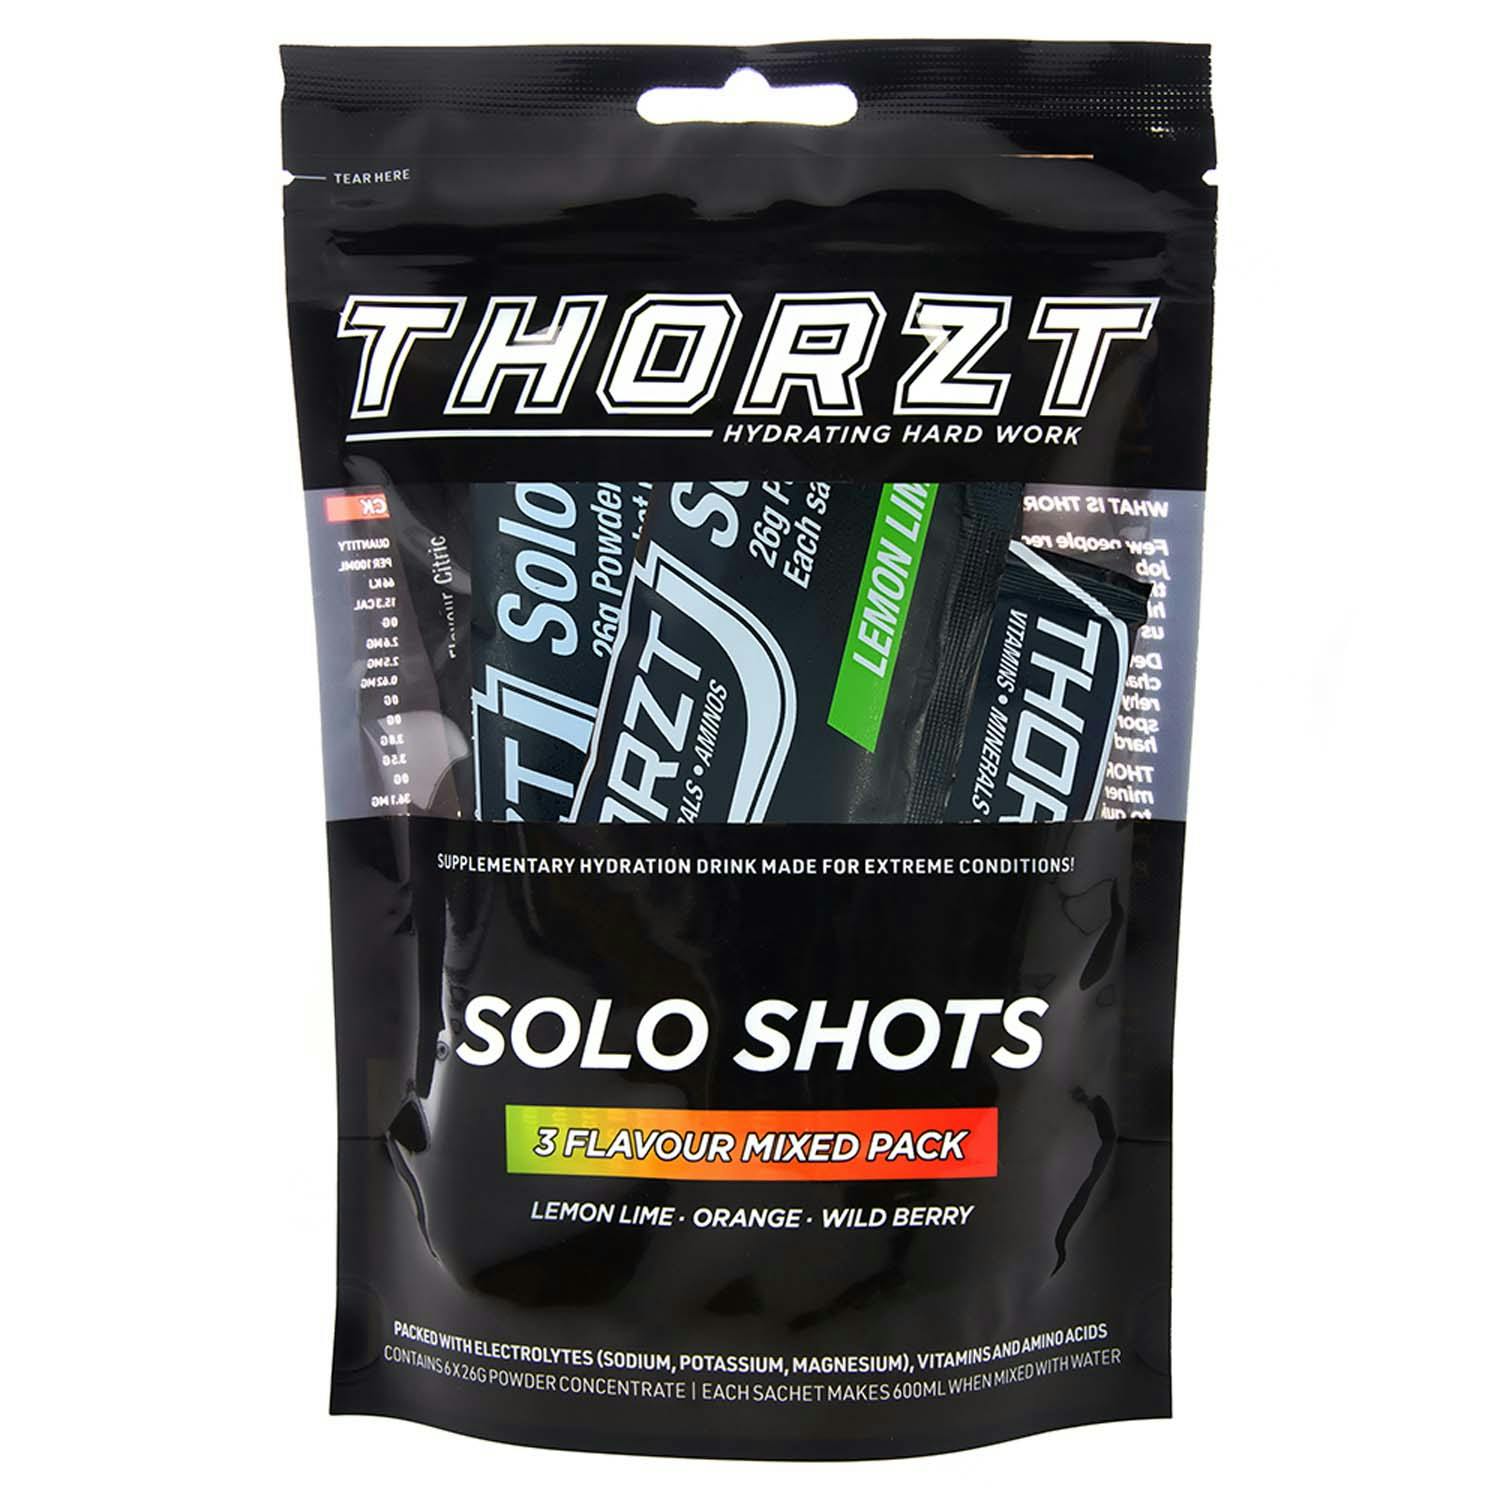 Thorzt 99% sugar free solo shot hydration drink